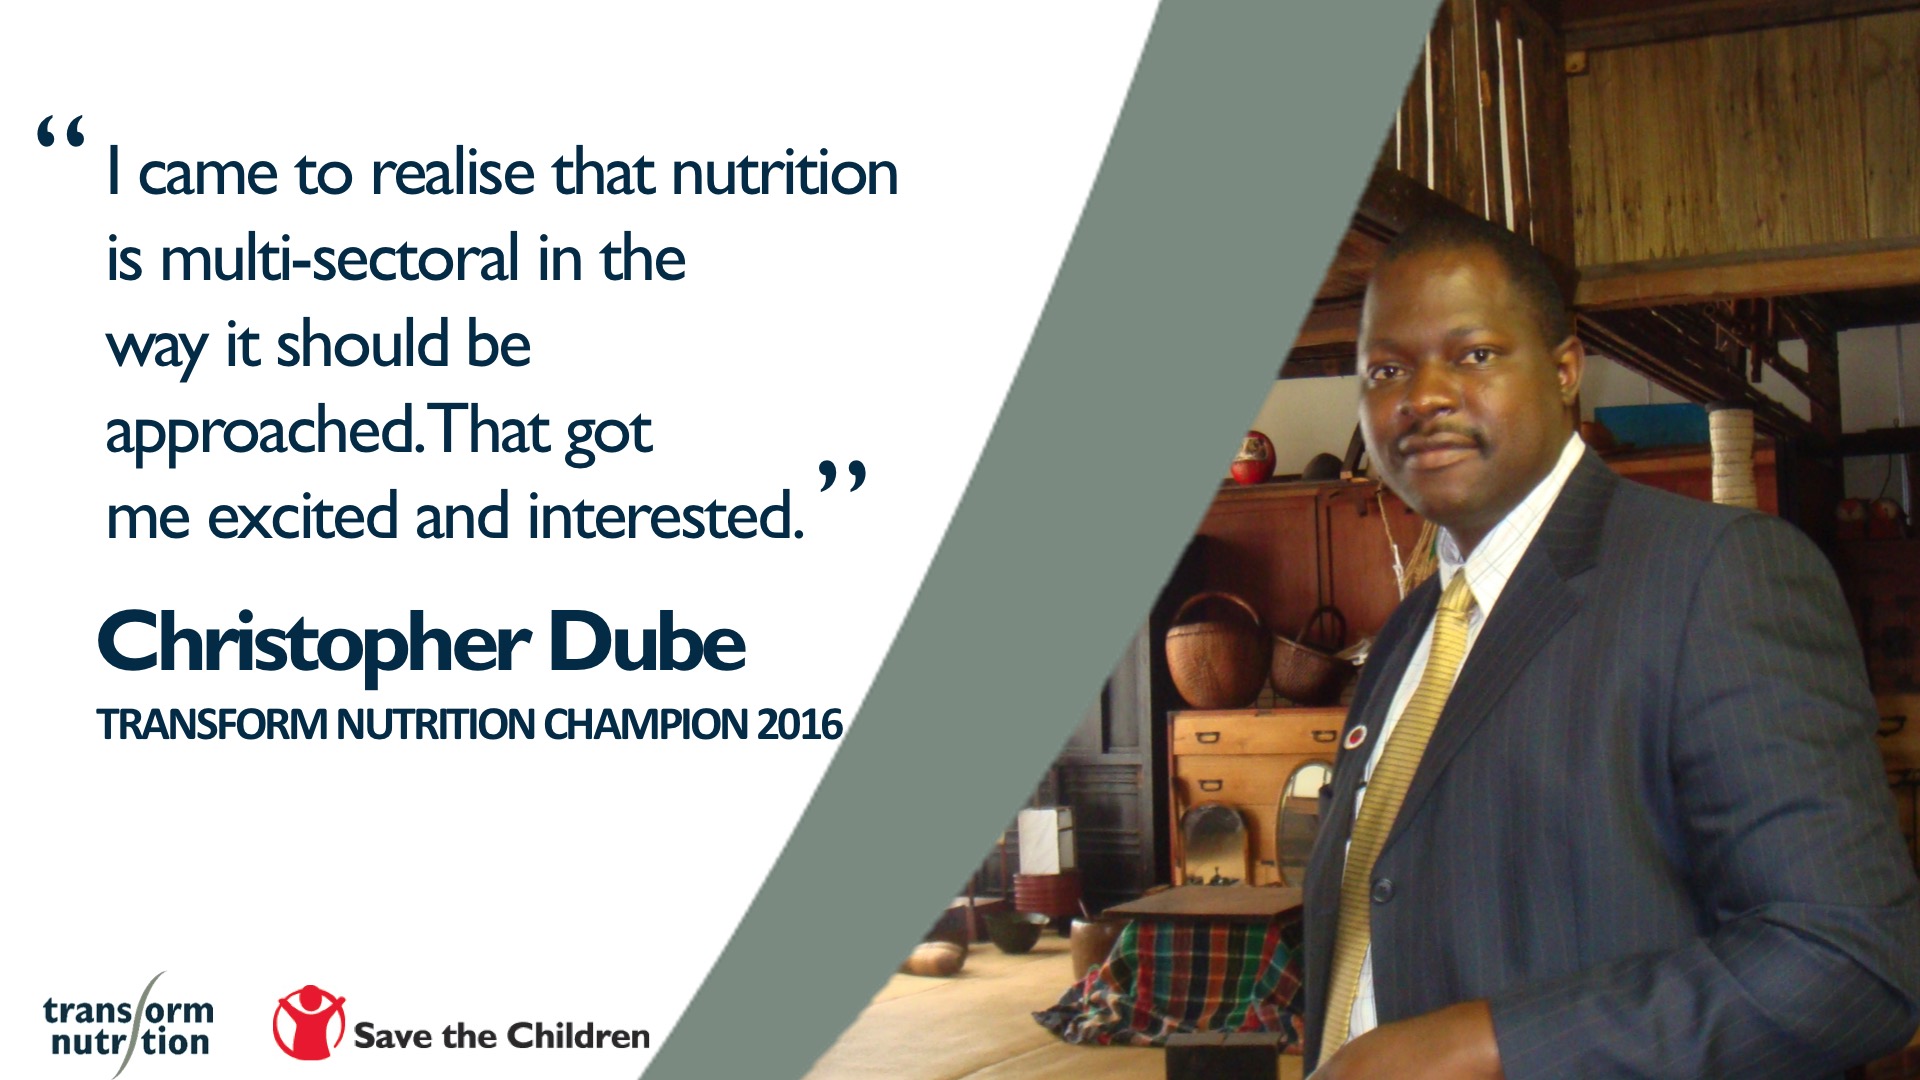 Christopher Dube of Zambia – 2016 Transform Nutrition Champion